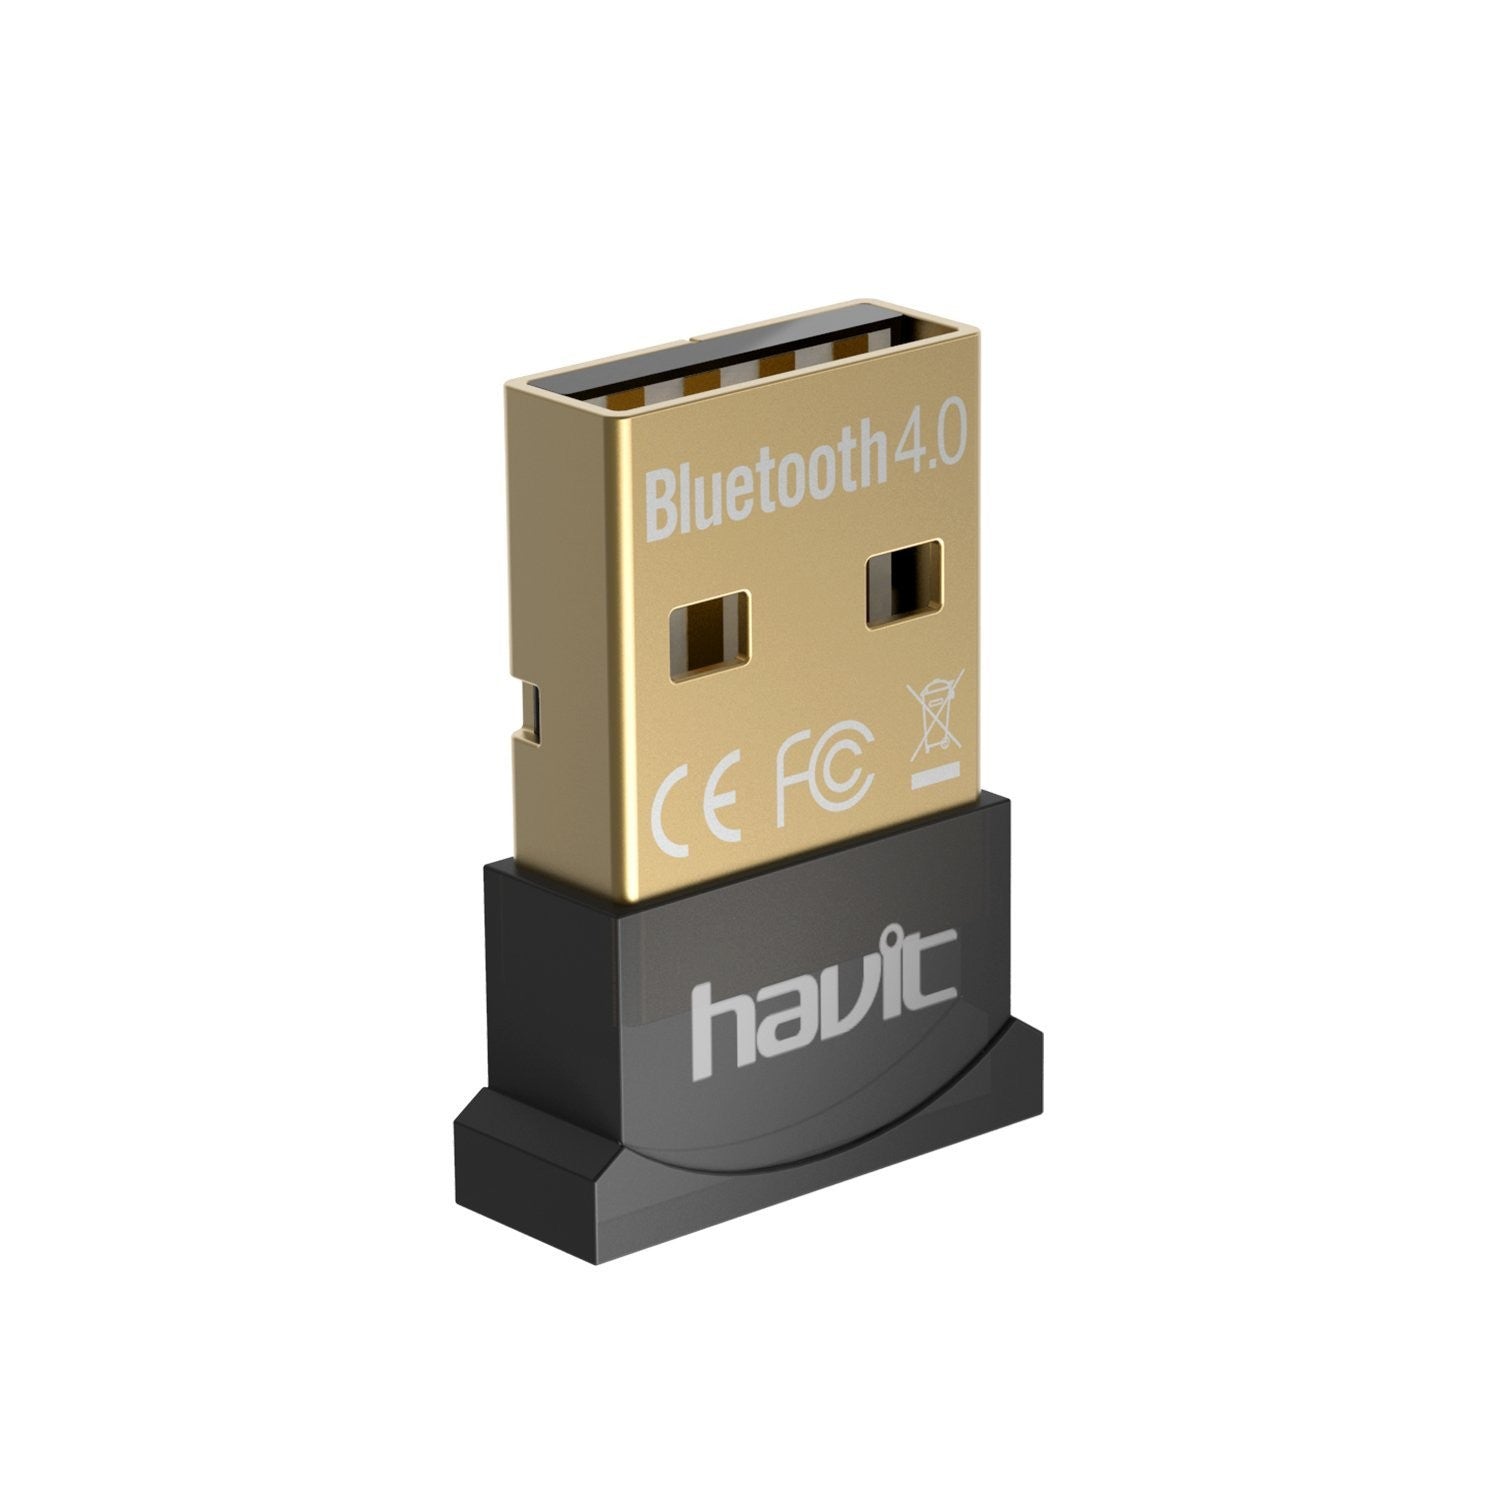 HAVIT HV-888 Bluetooth Adapter / Dongle for Windows Computer